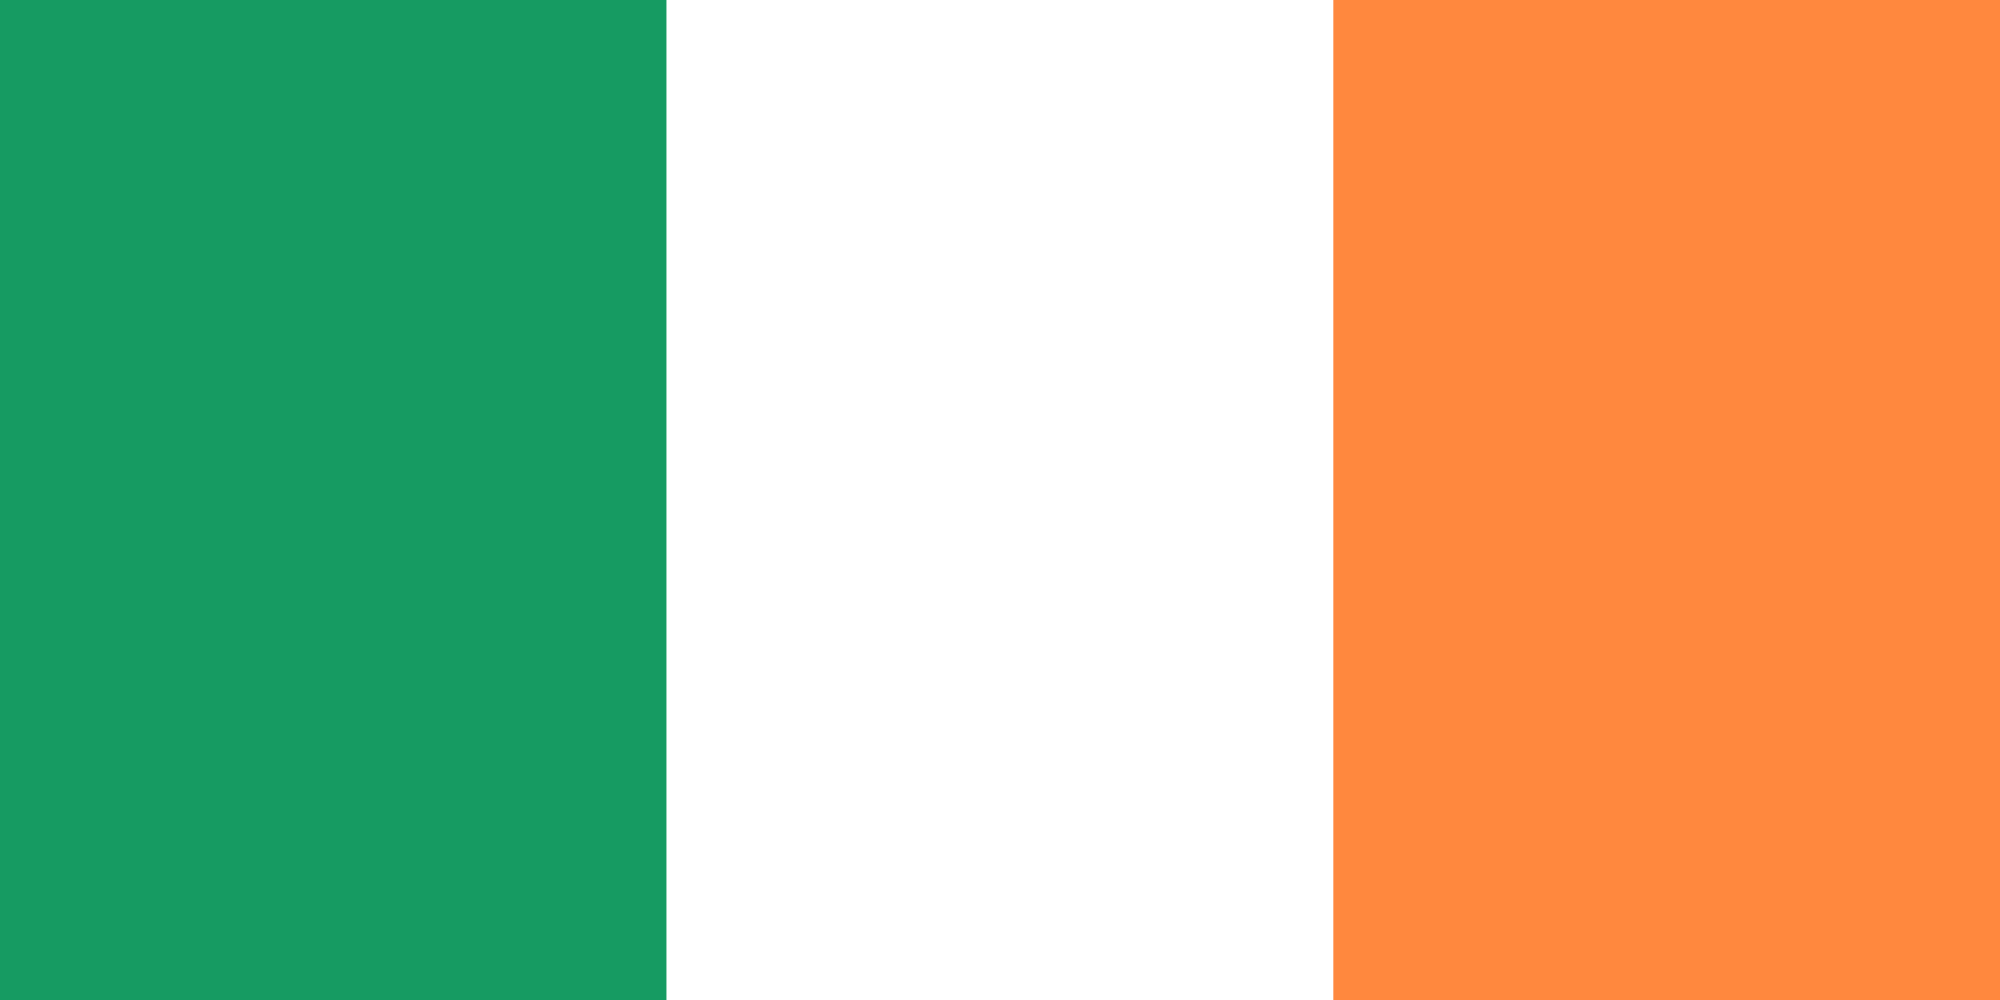 https://upload.wikimedia.org/wikipedia/commons/thumb/4/45/Flag_of_Ireland.svg/2000px-Flag_of_Ireland.svg.png